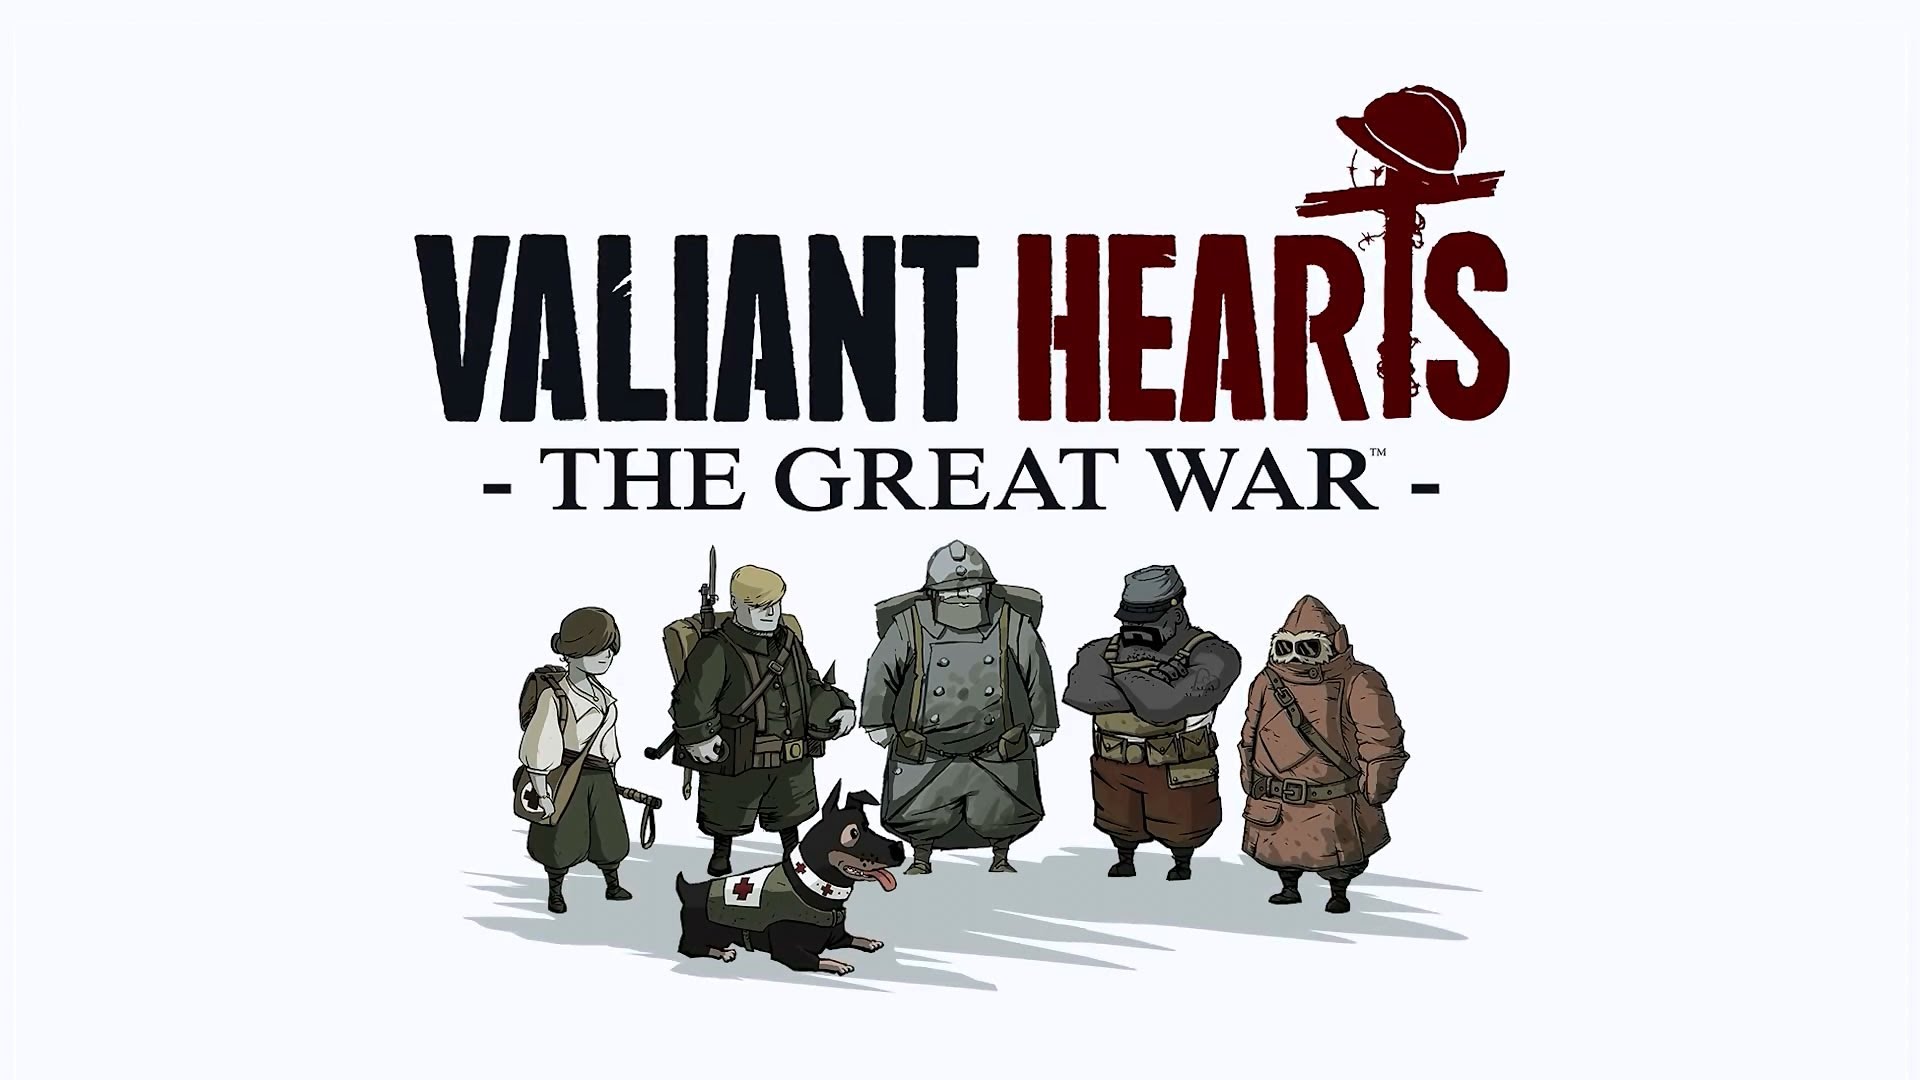 Valiant Hearts: The Great War #1